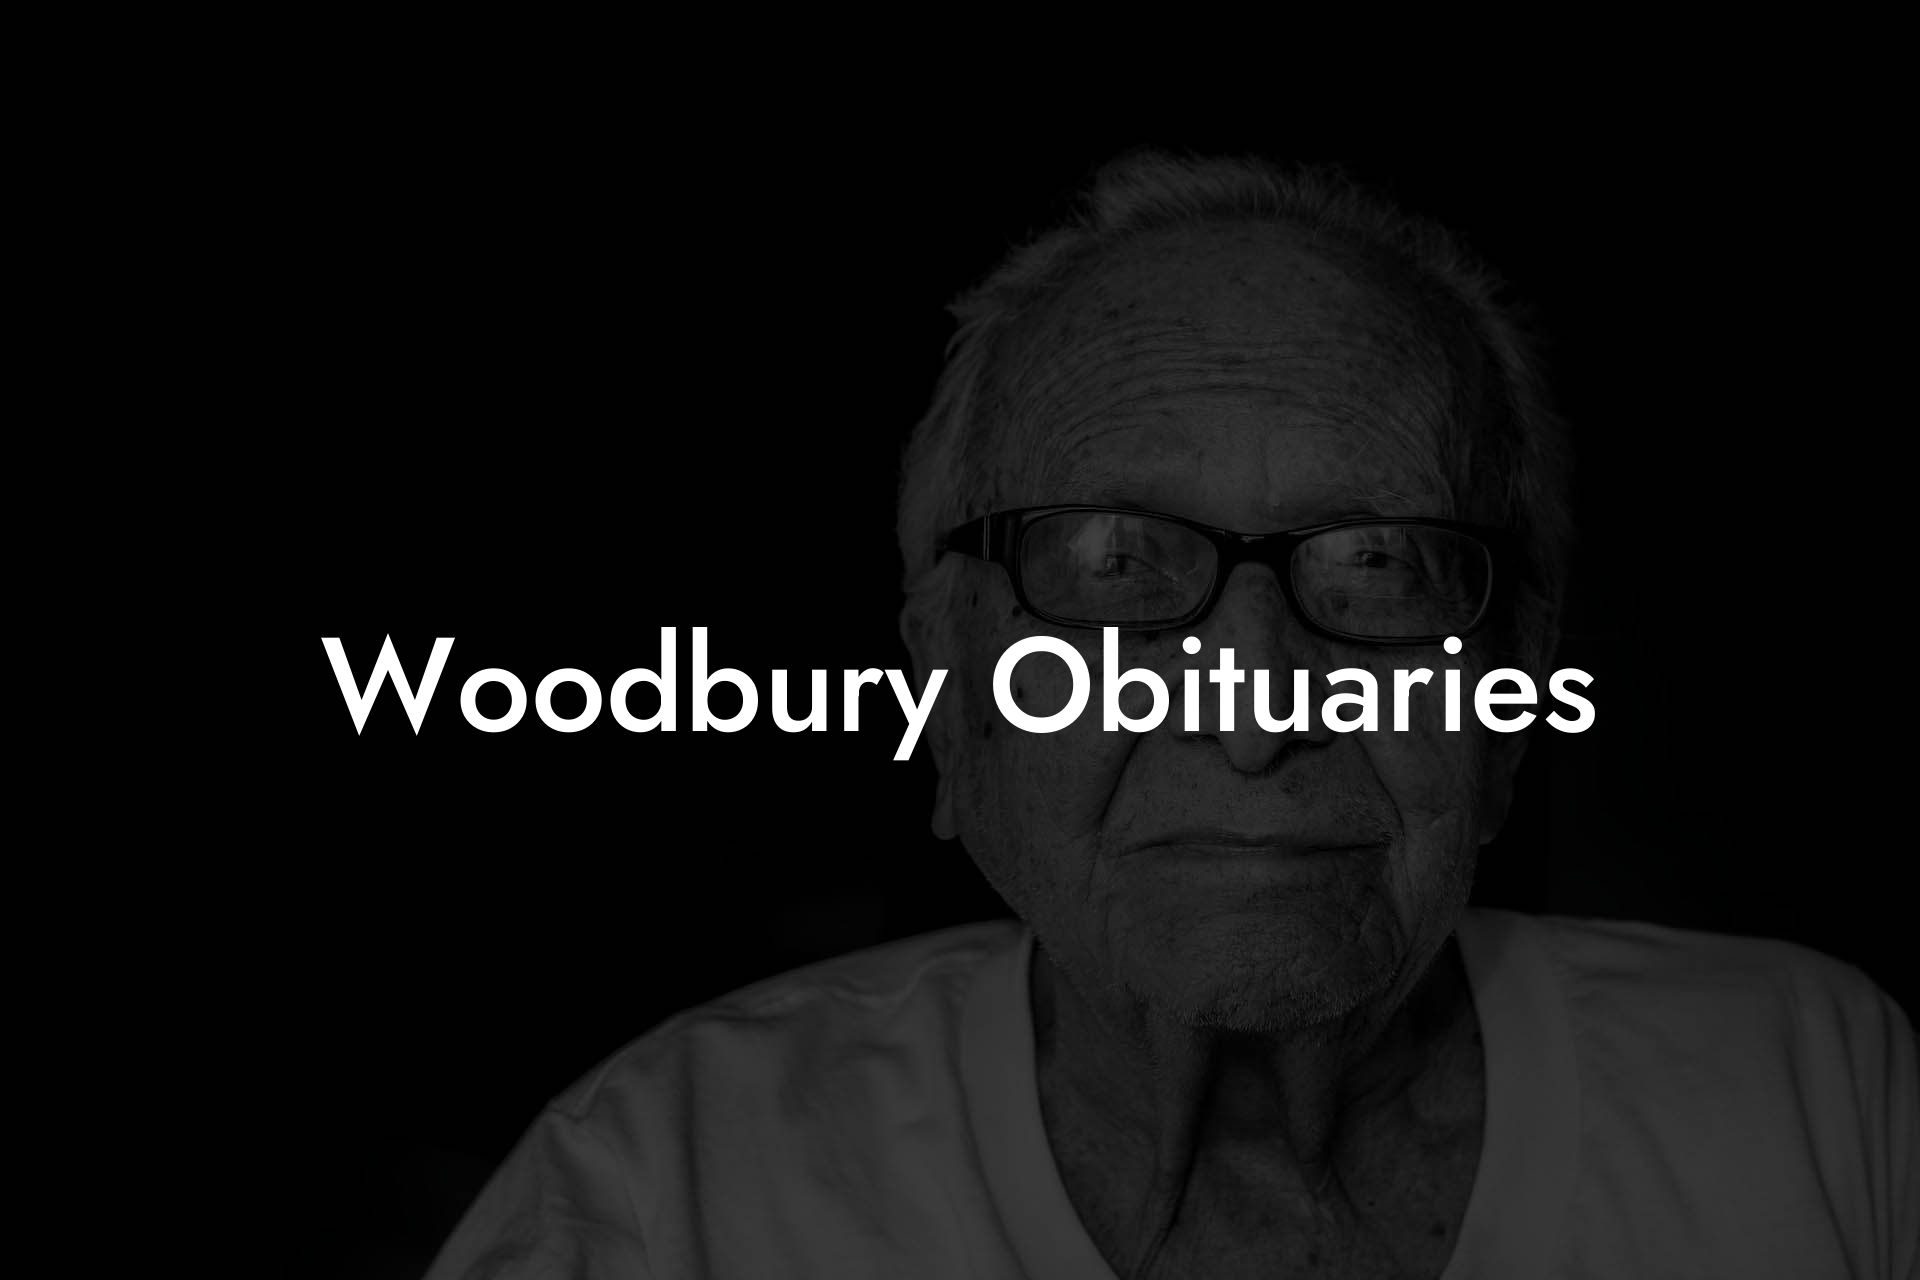 Woodbury Obituaries